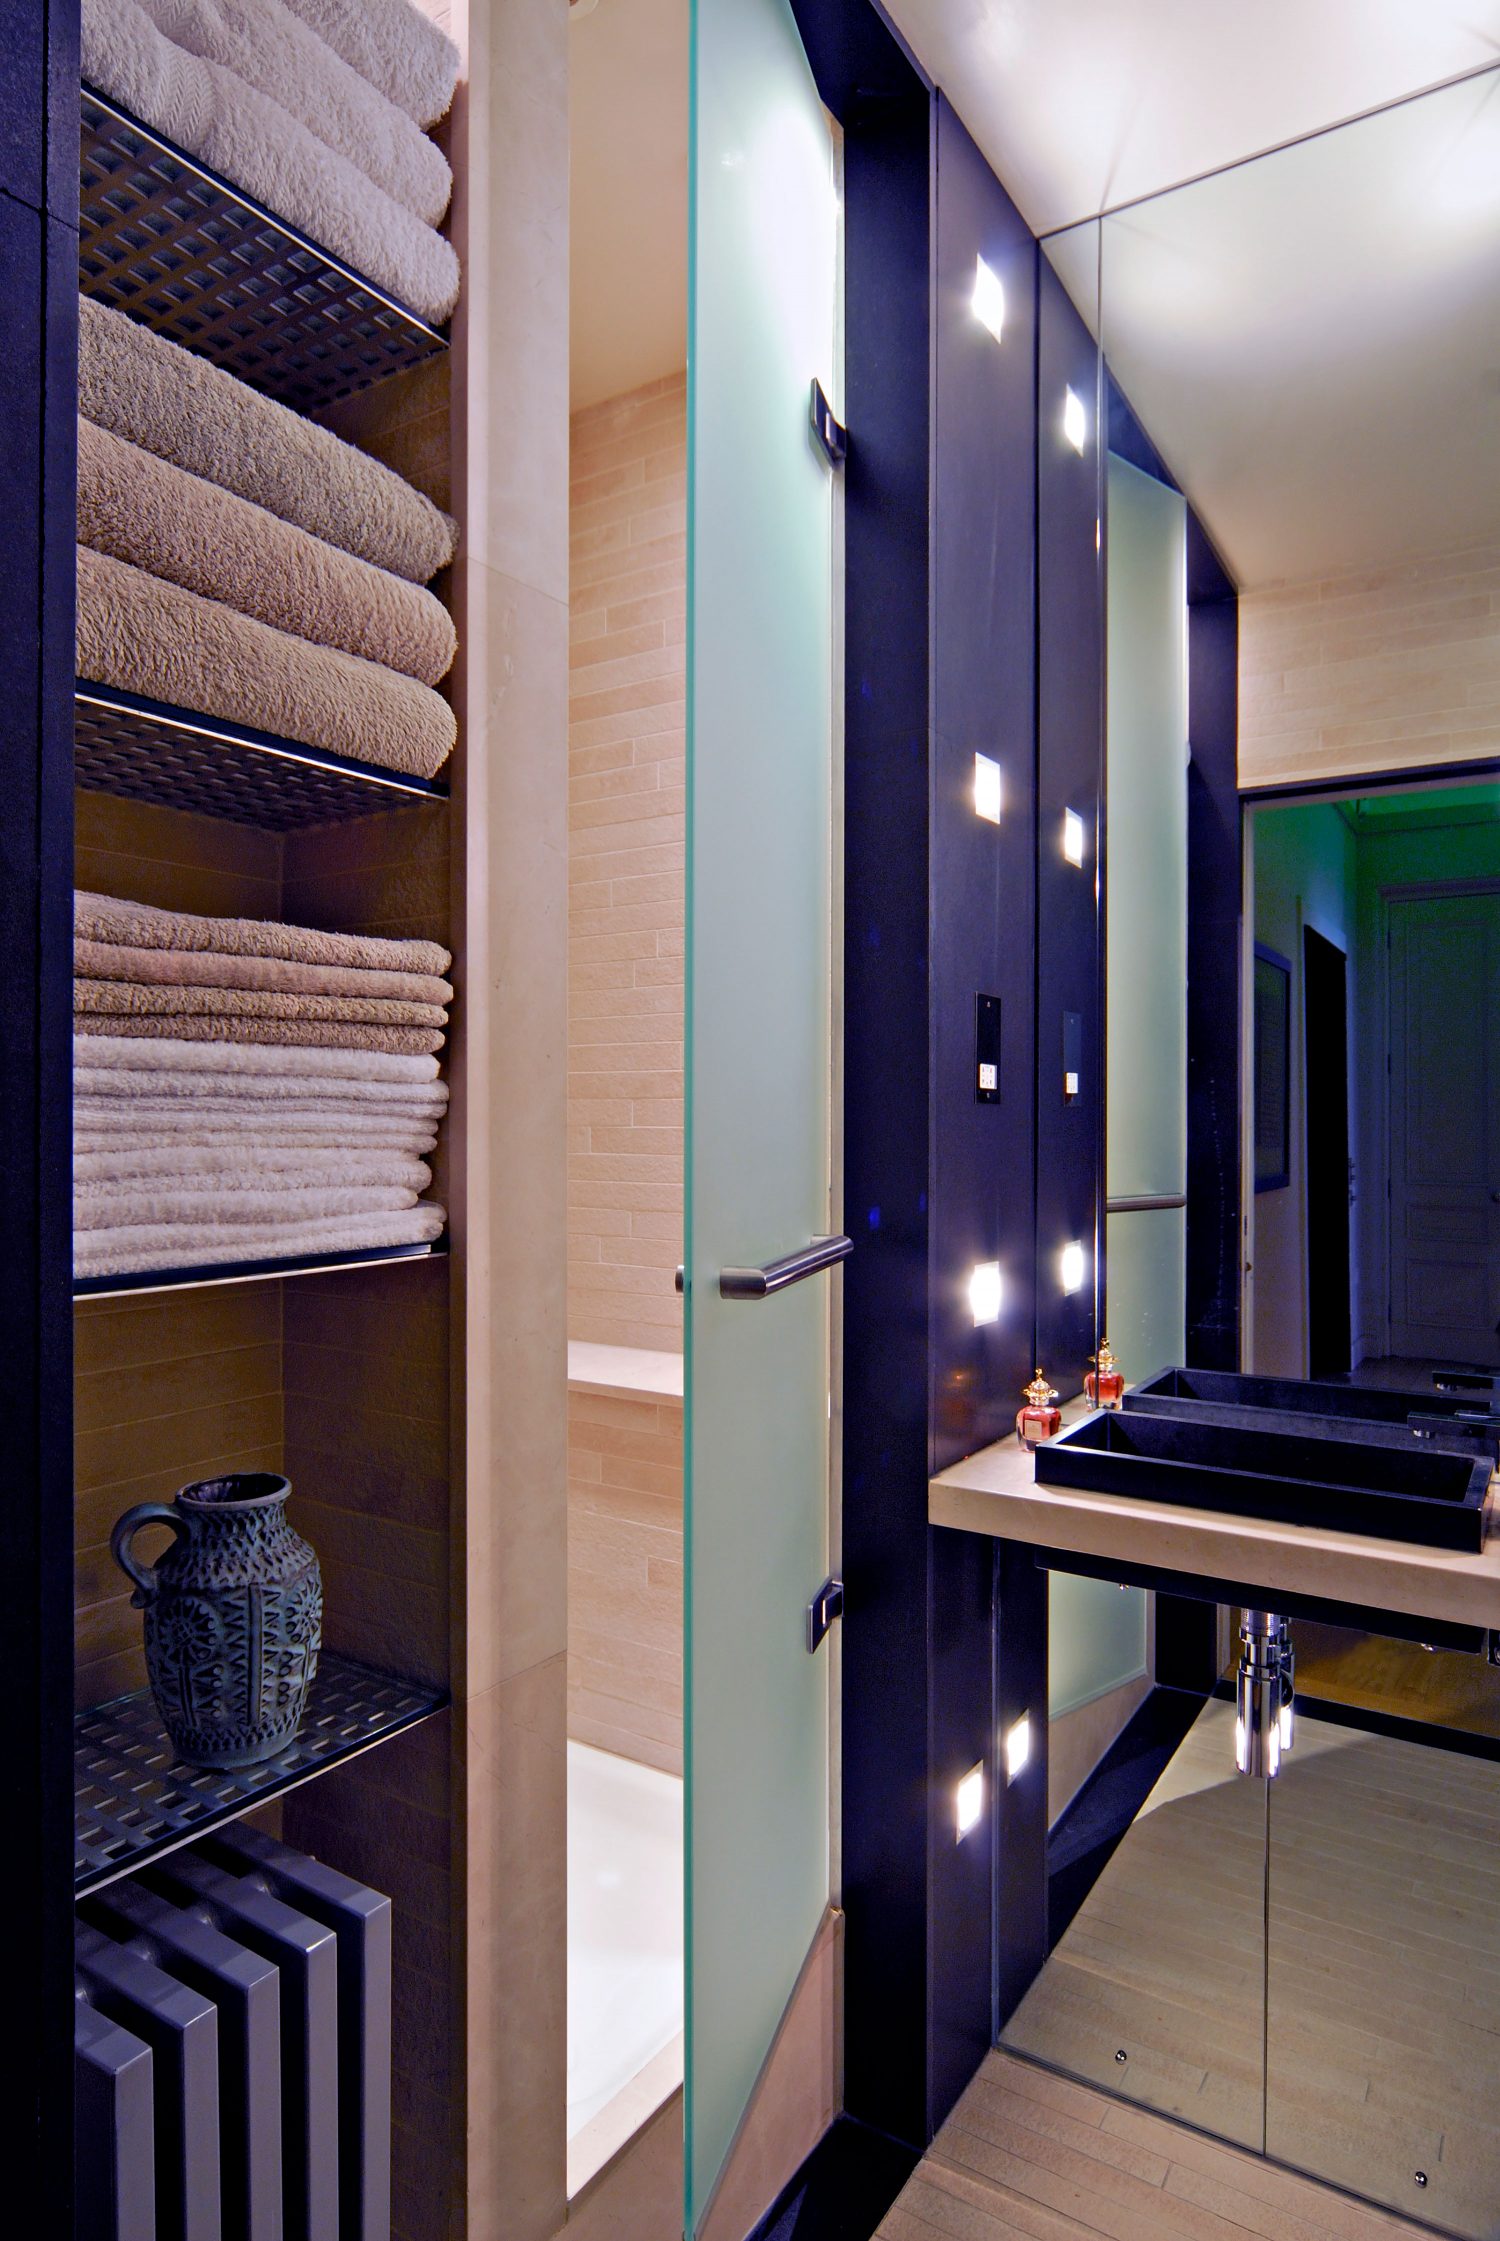 Two Grand Drawing Rooms by Daniel Hopwood – stylish bathroom shelving. Kensington interior design